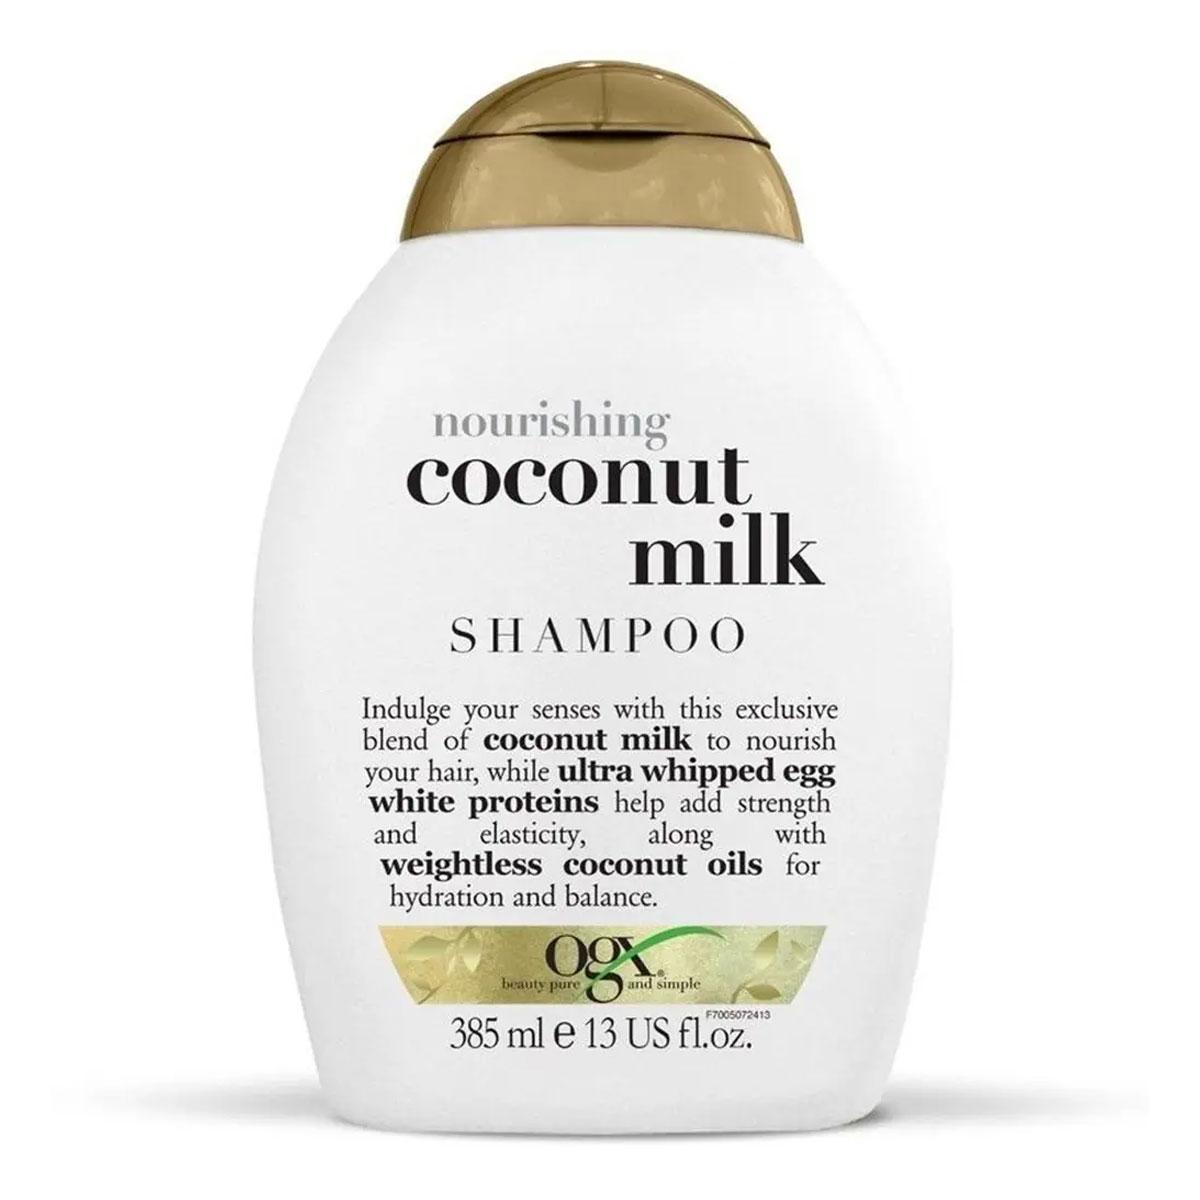 شامپو کوکونات میلک - coconut milk shampoo